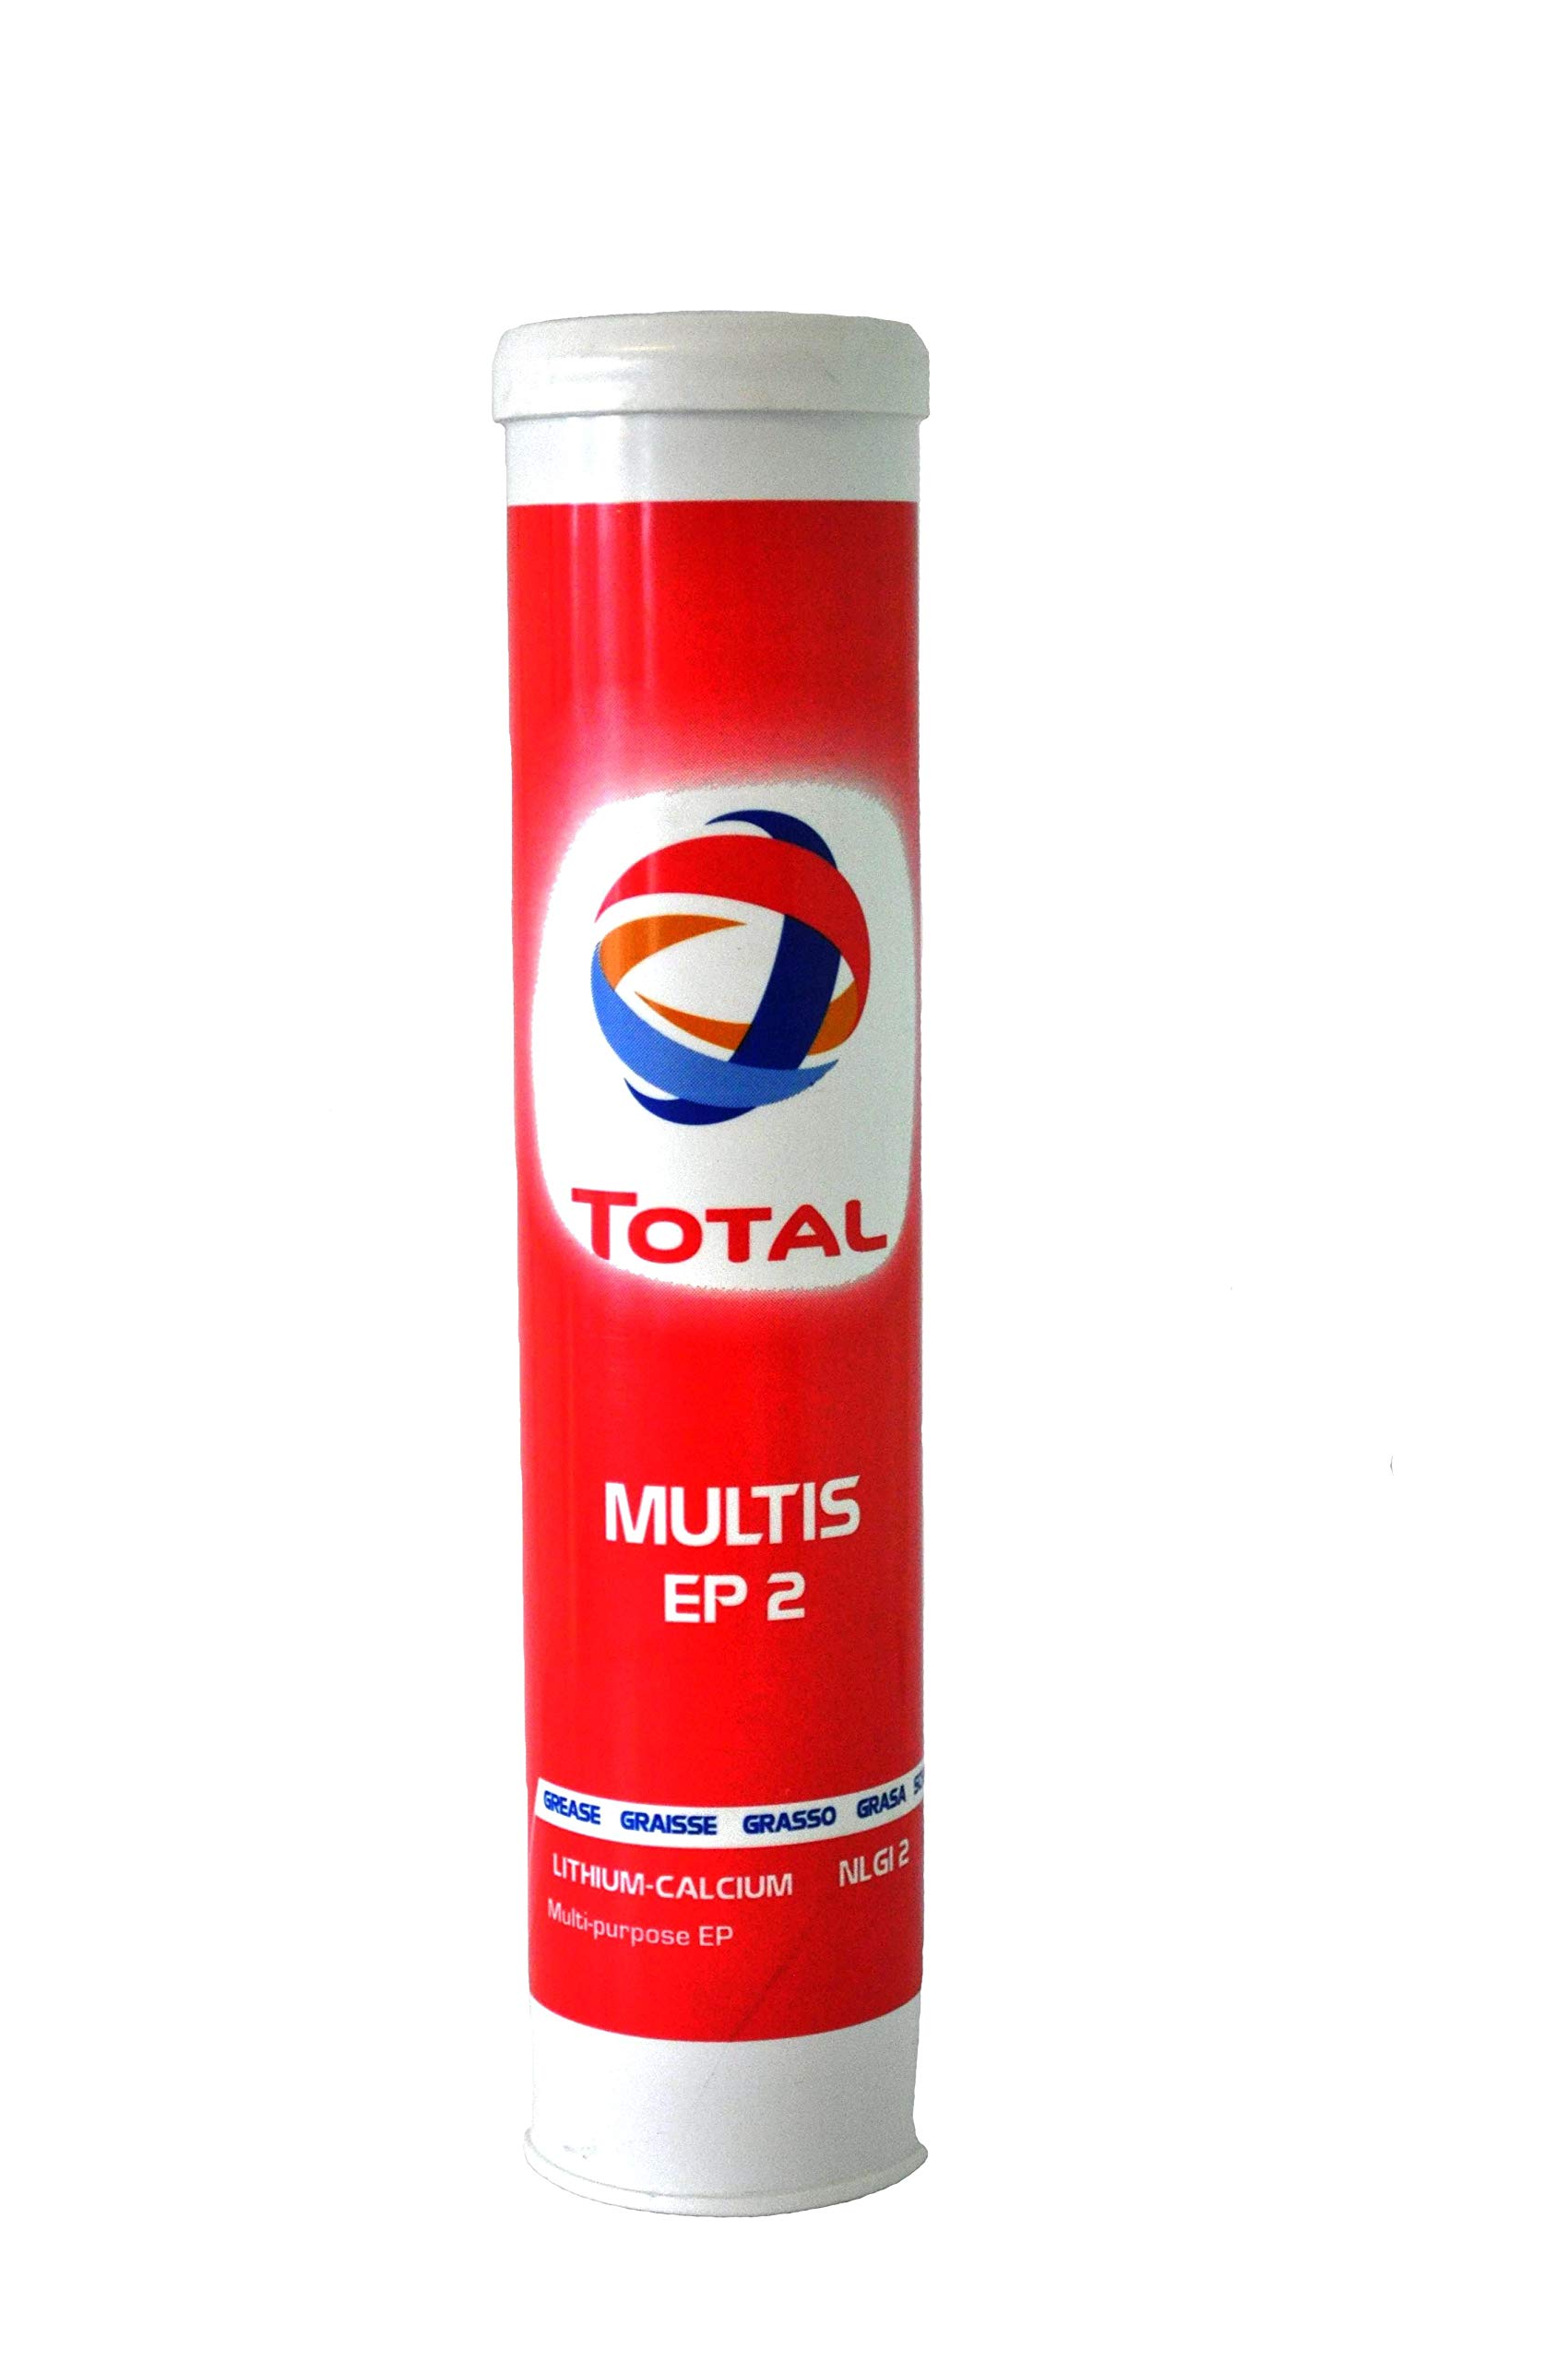 Total Fett Multis EP 2 Grease Schmierung Schmierfett NL GI 2 400g 160804 von Total